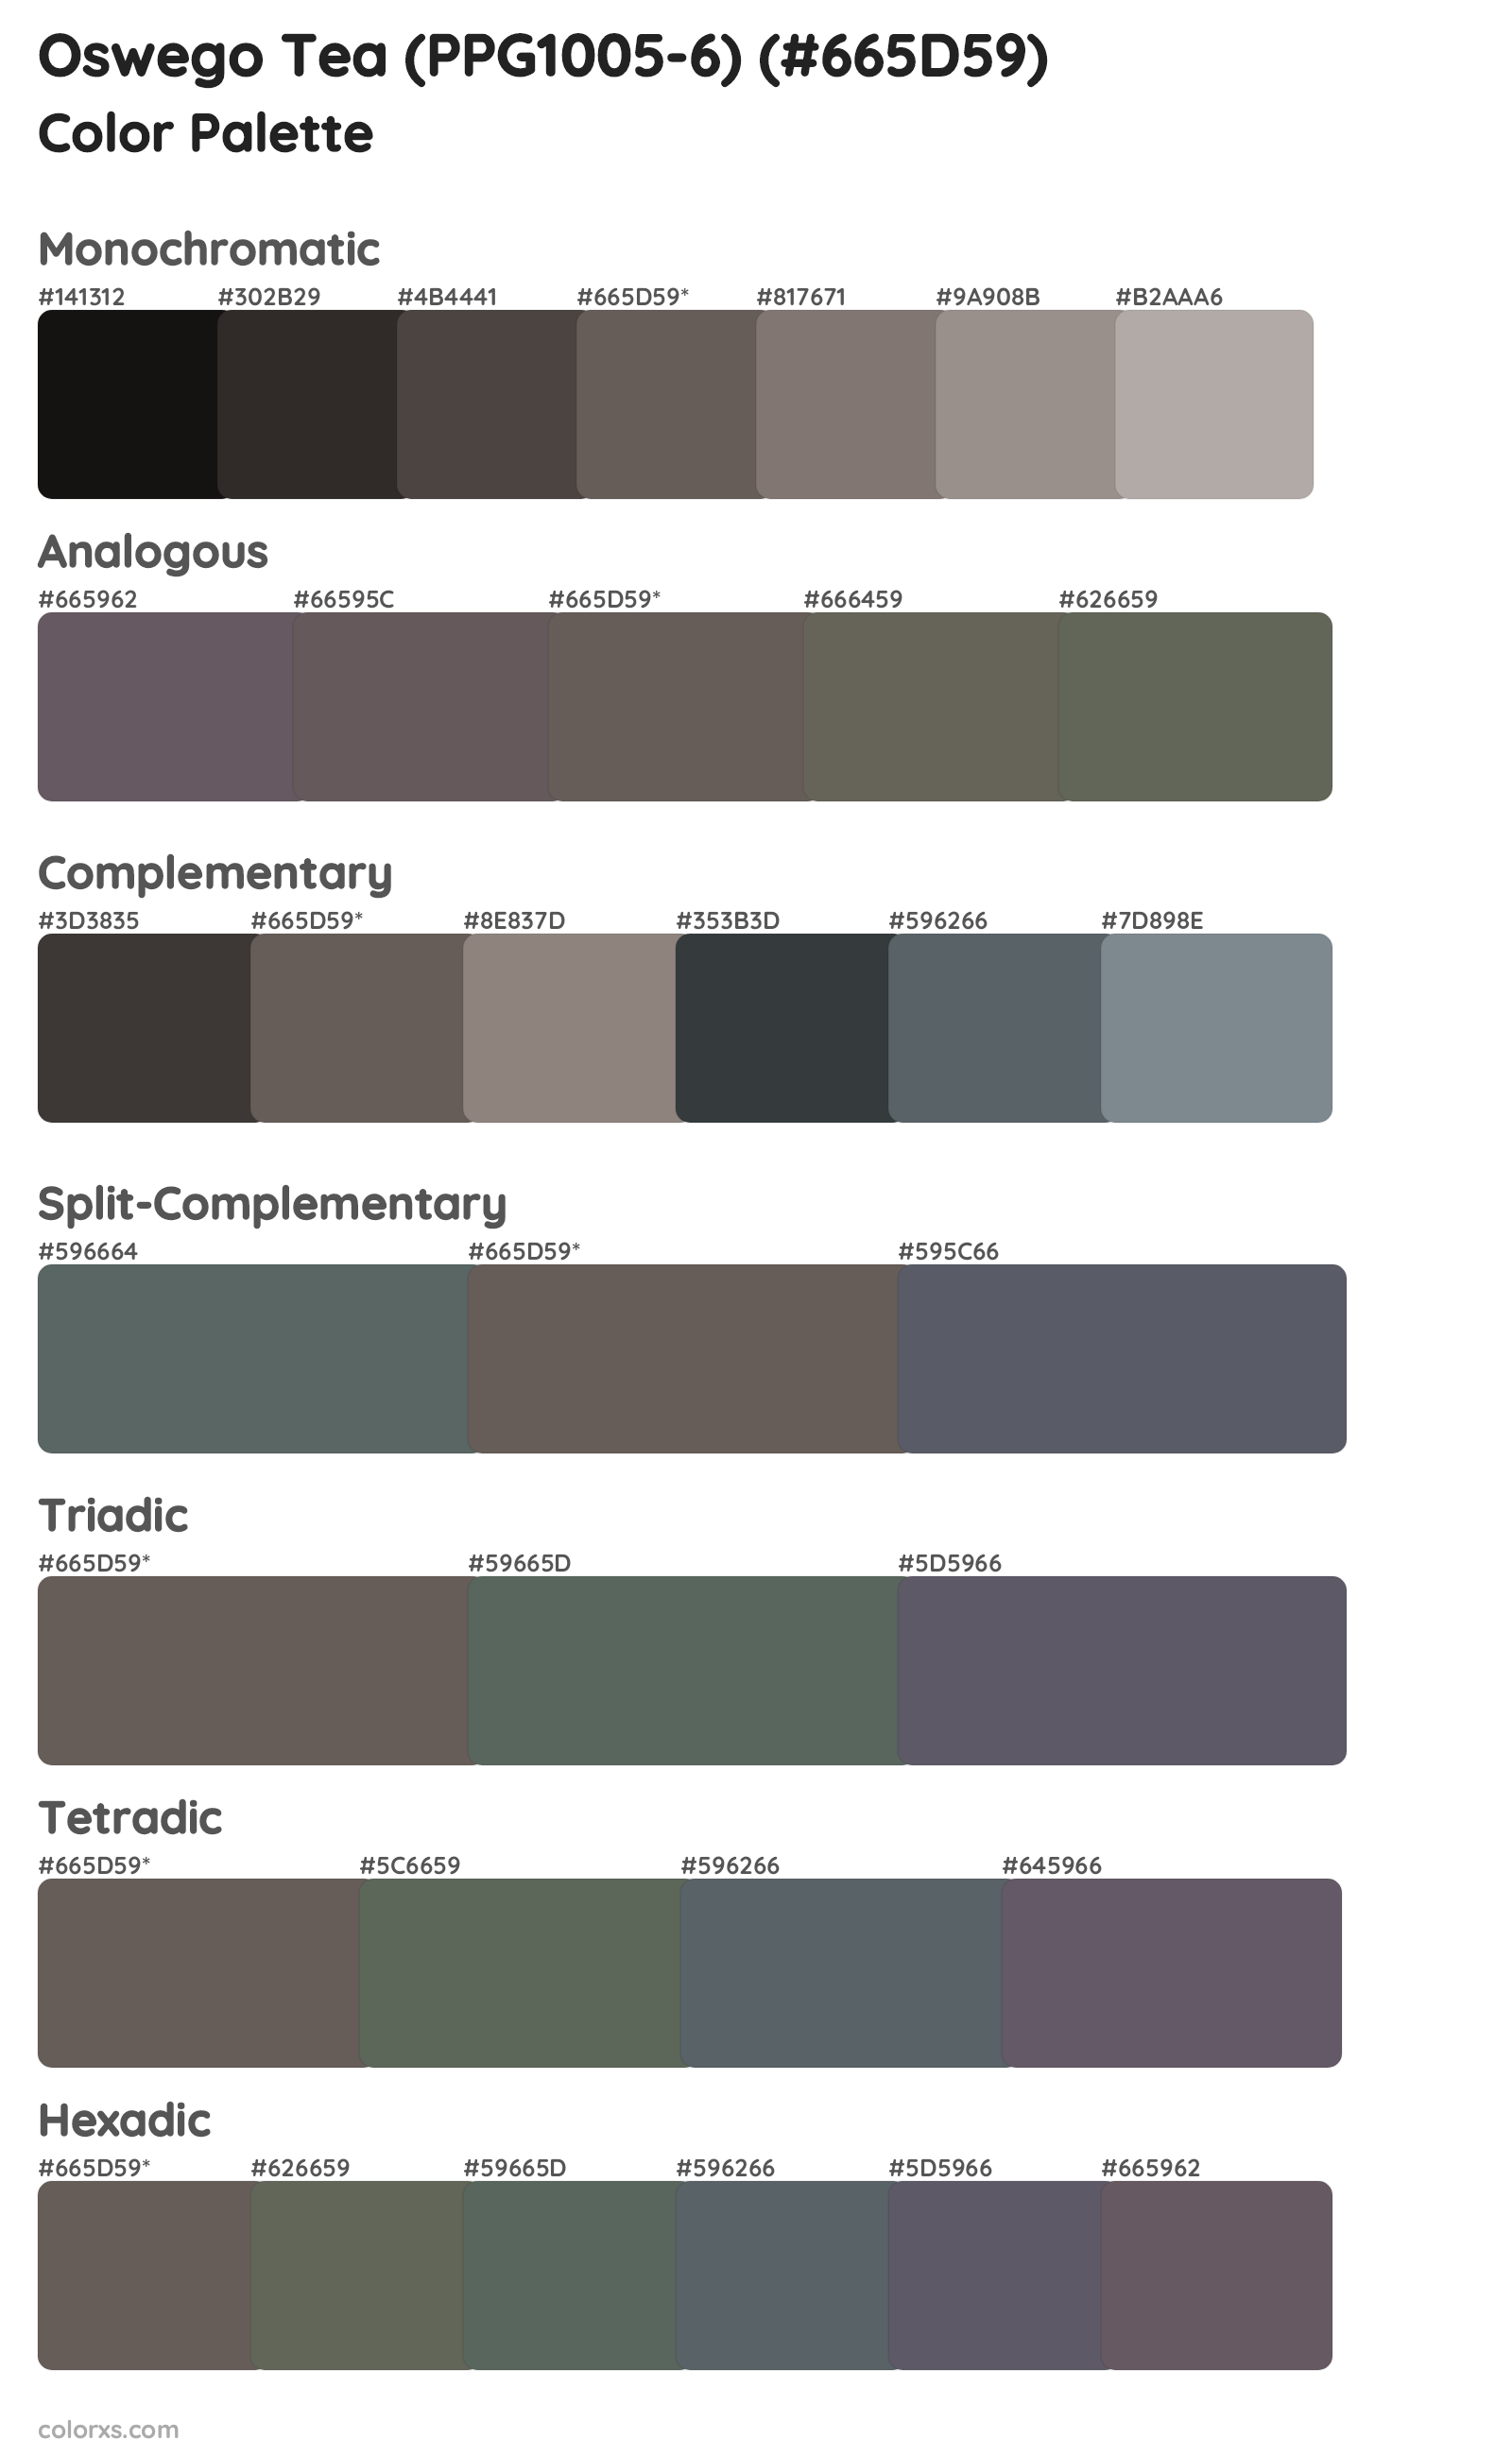 Oswego Tea (PPG1005-6) Color Scheme Palettes